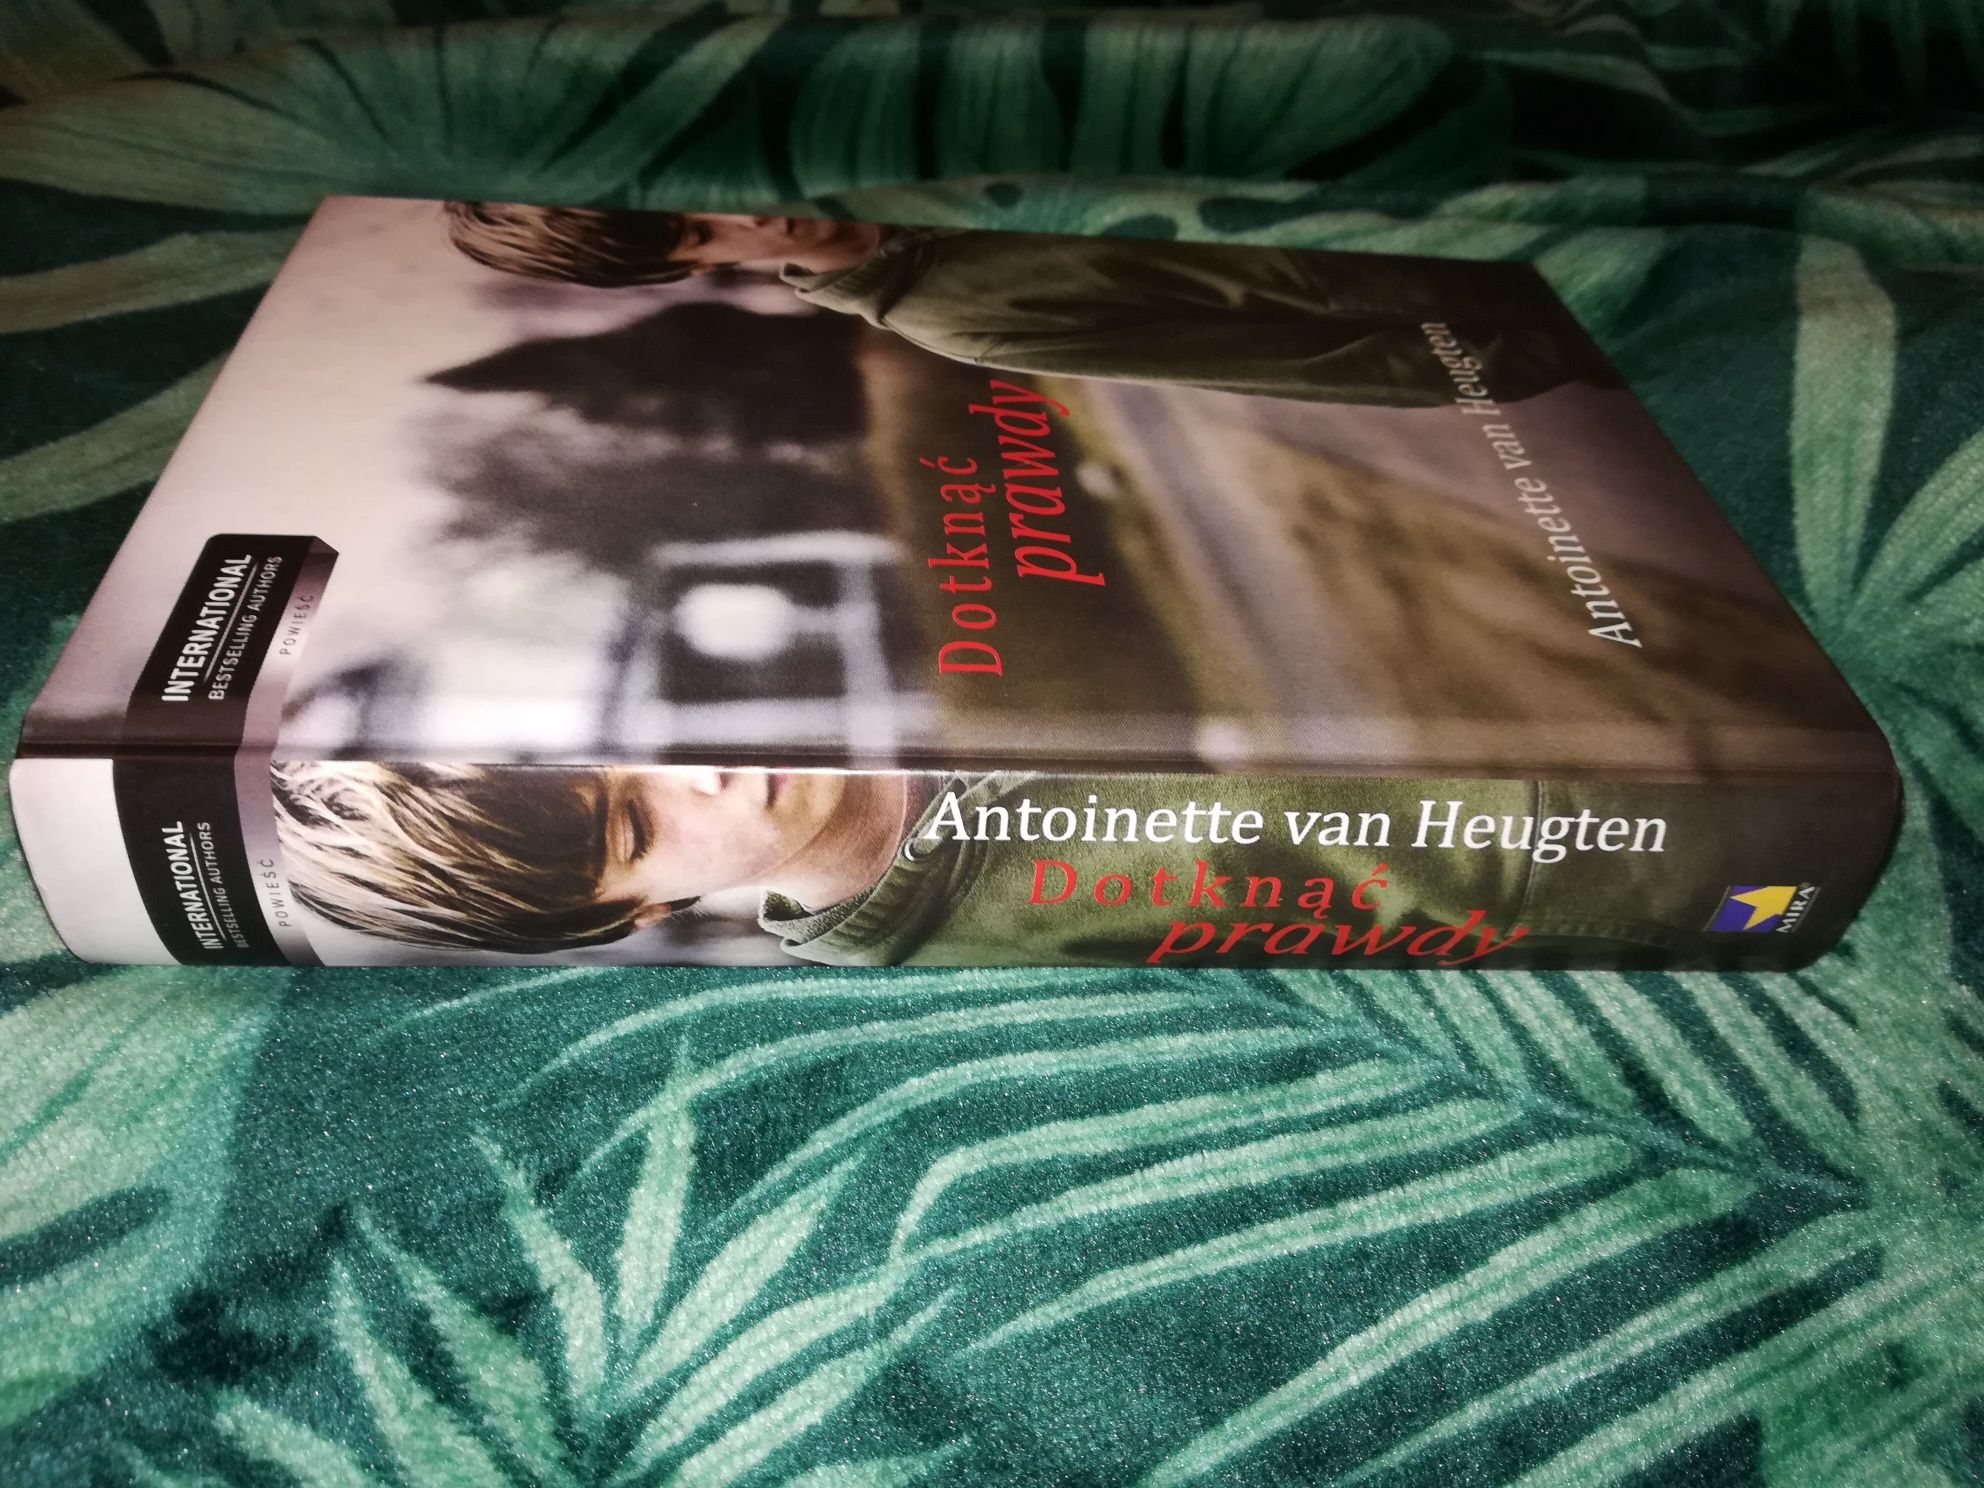 Z DEDYKACJĄ Książka Dotknąć prawdy Antoinette van Heugten